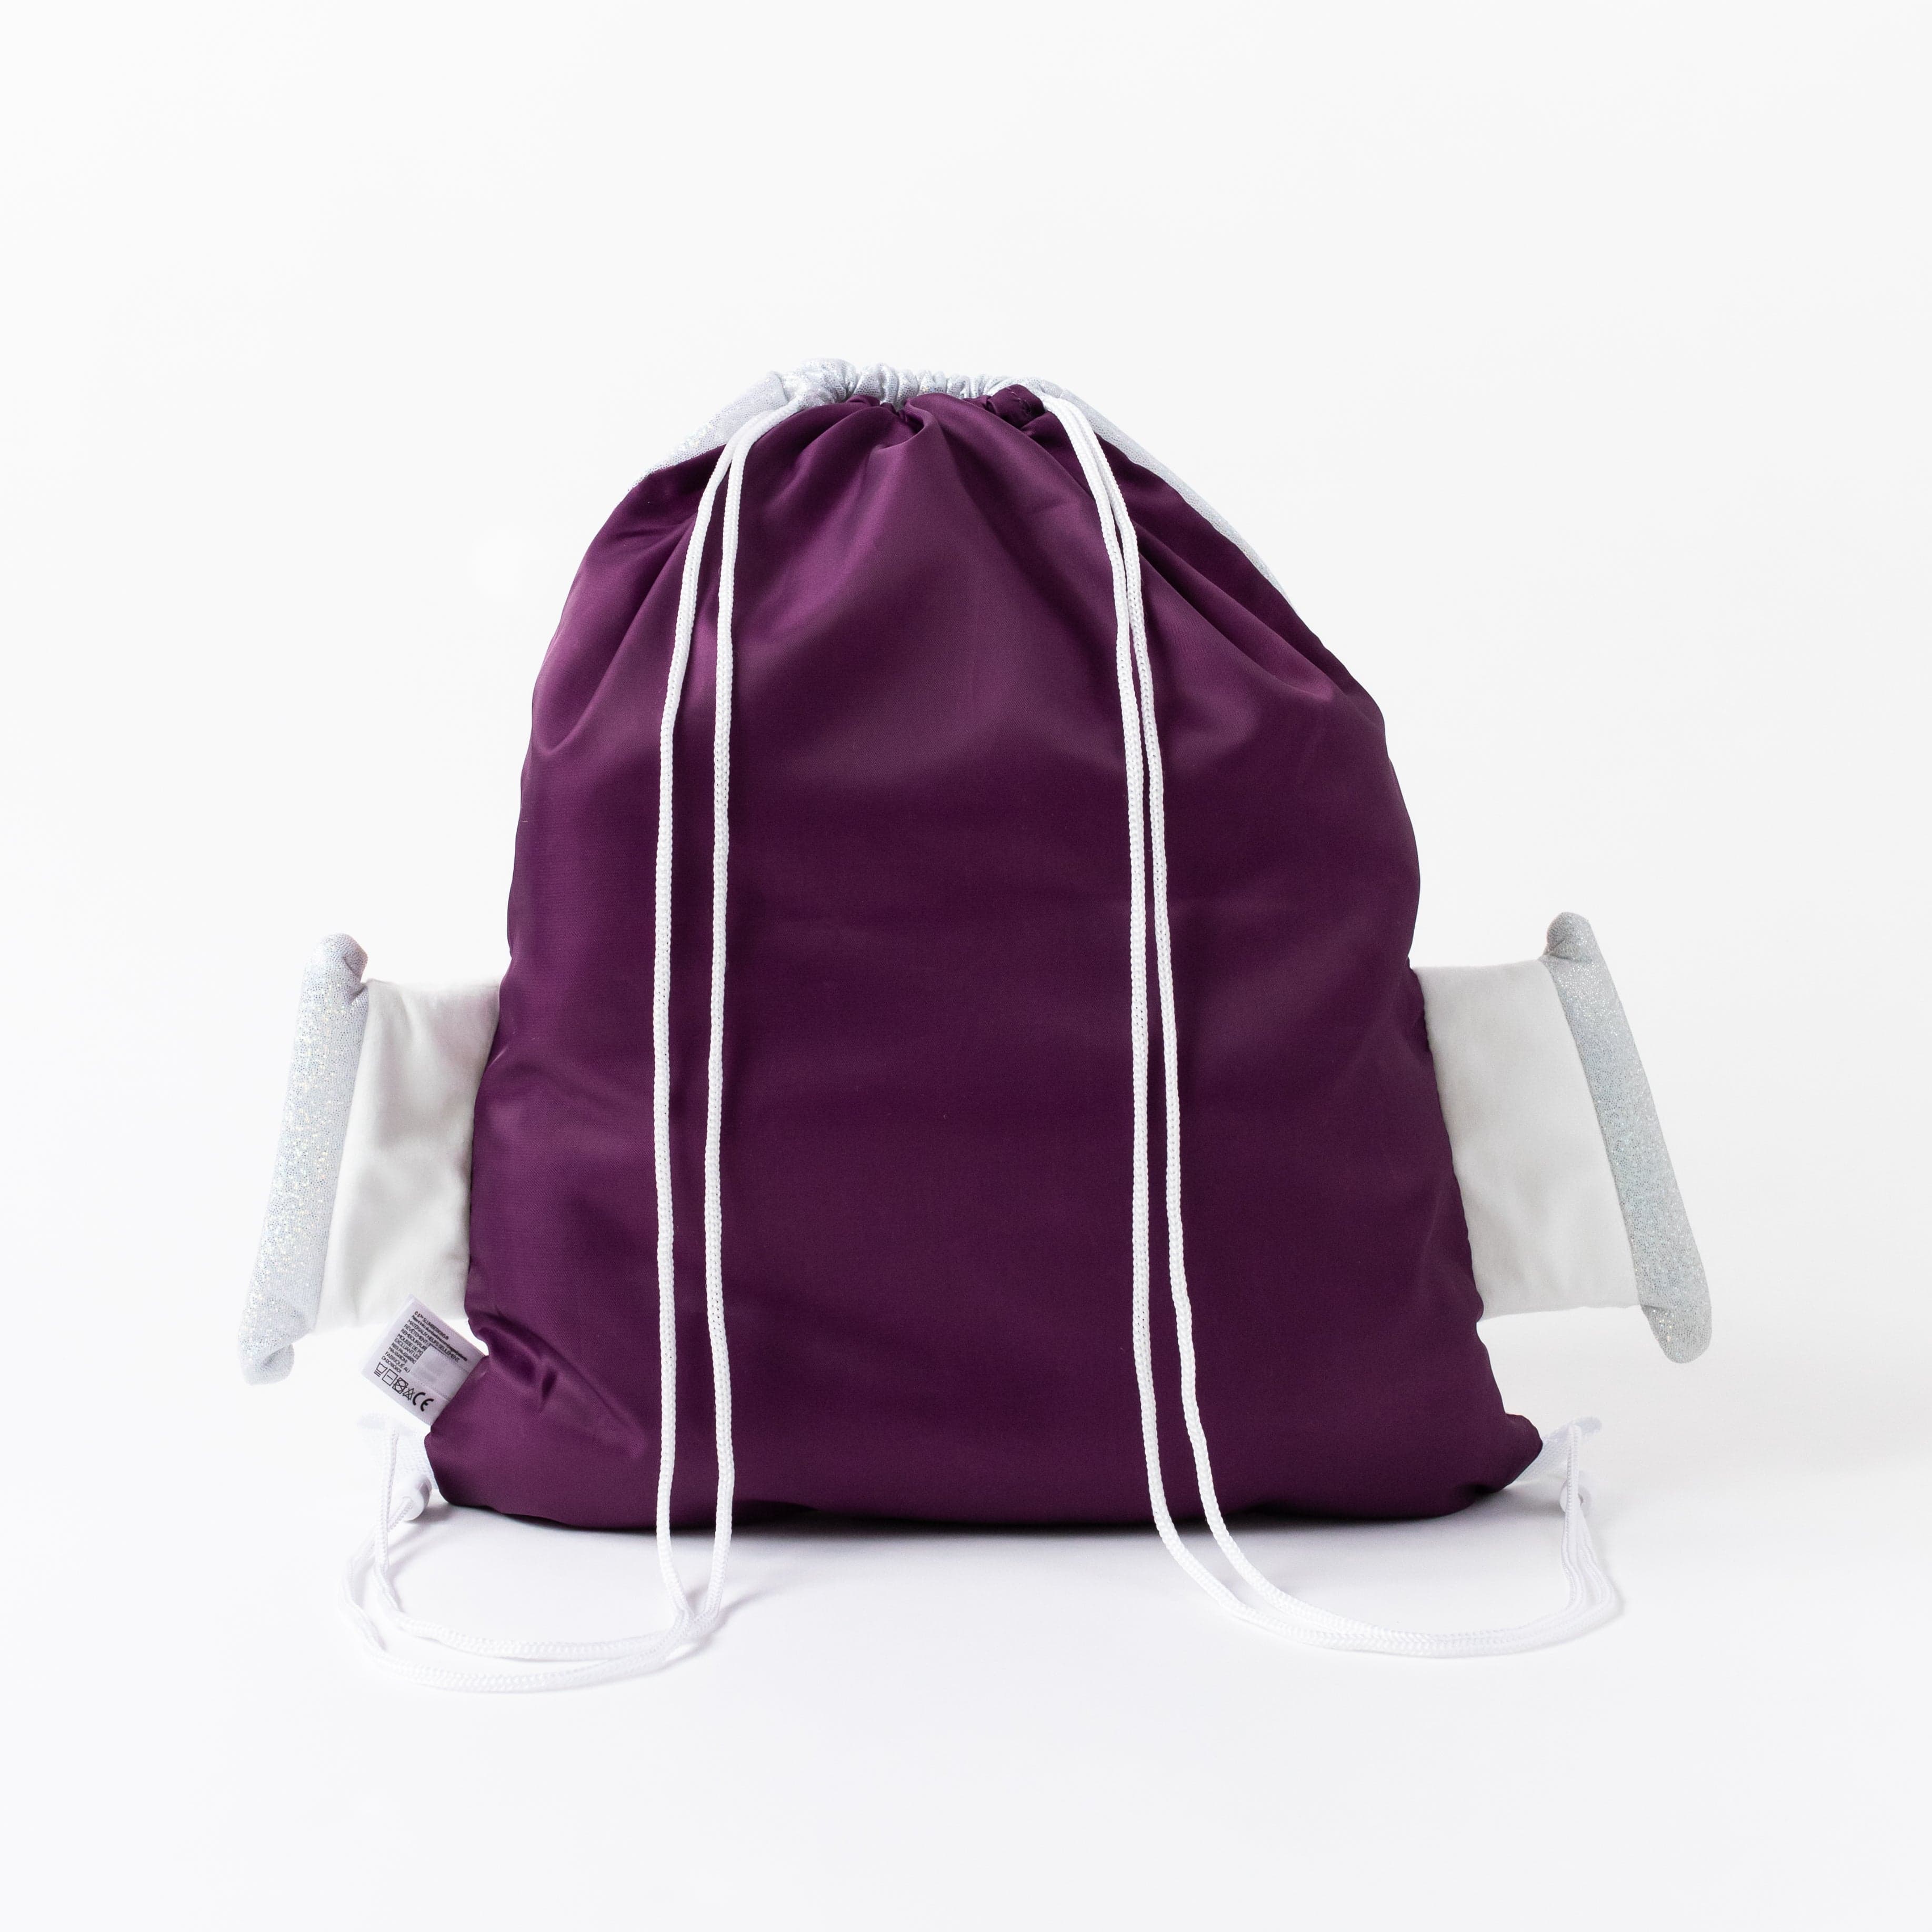 Jetpack Bag - View Product